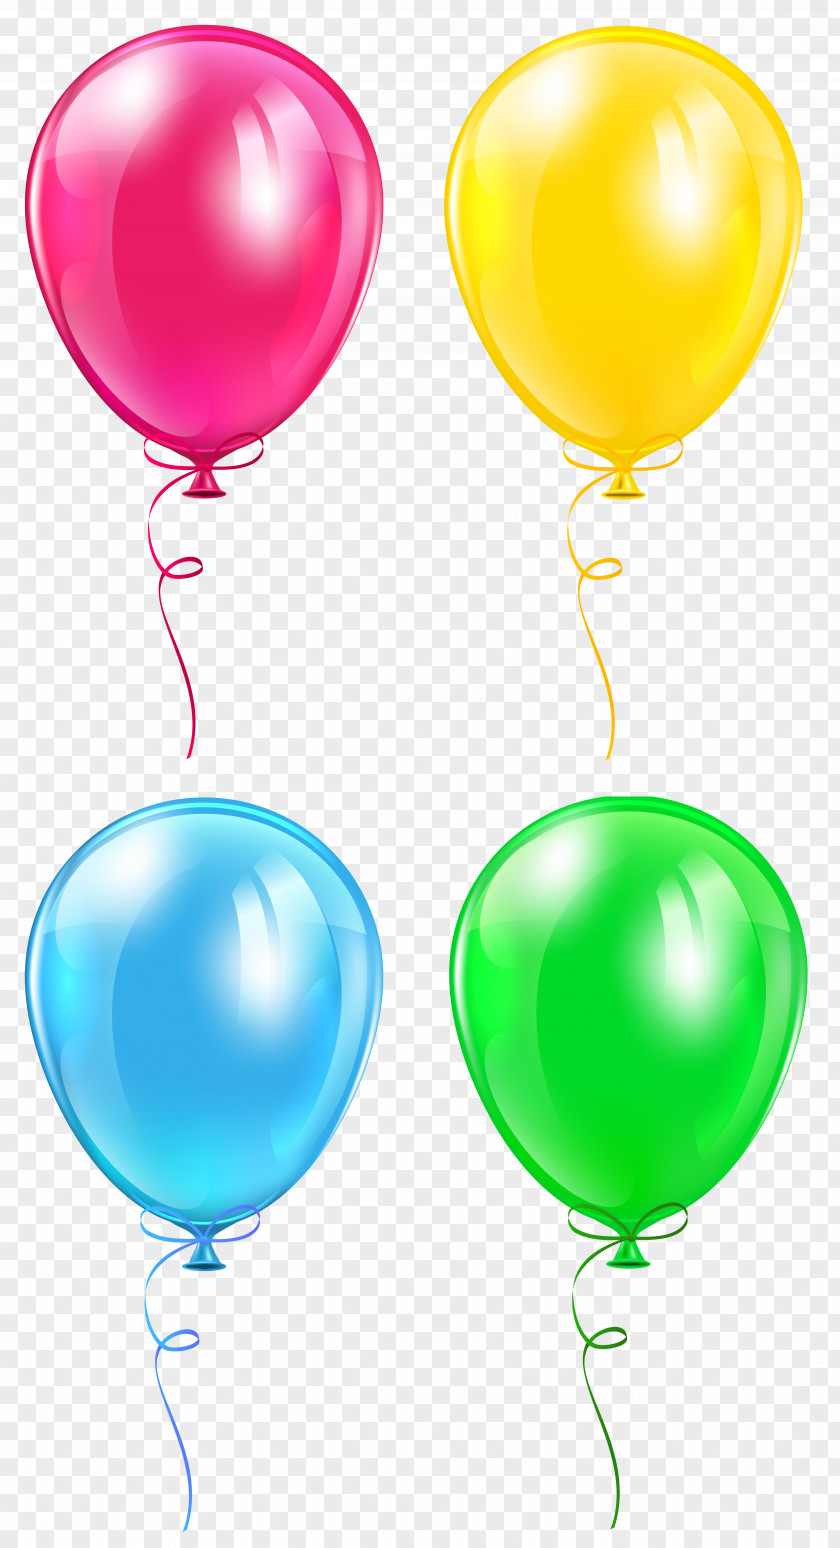 Balloons Set Transparent Image File Formats Lossless Compression PNG